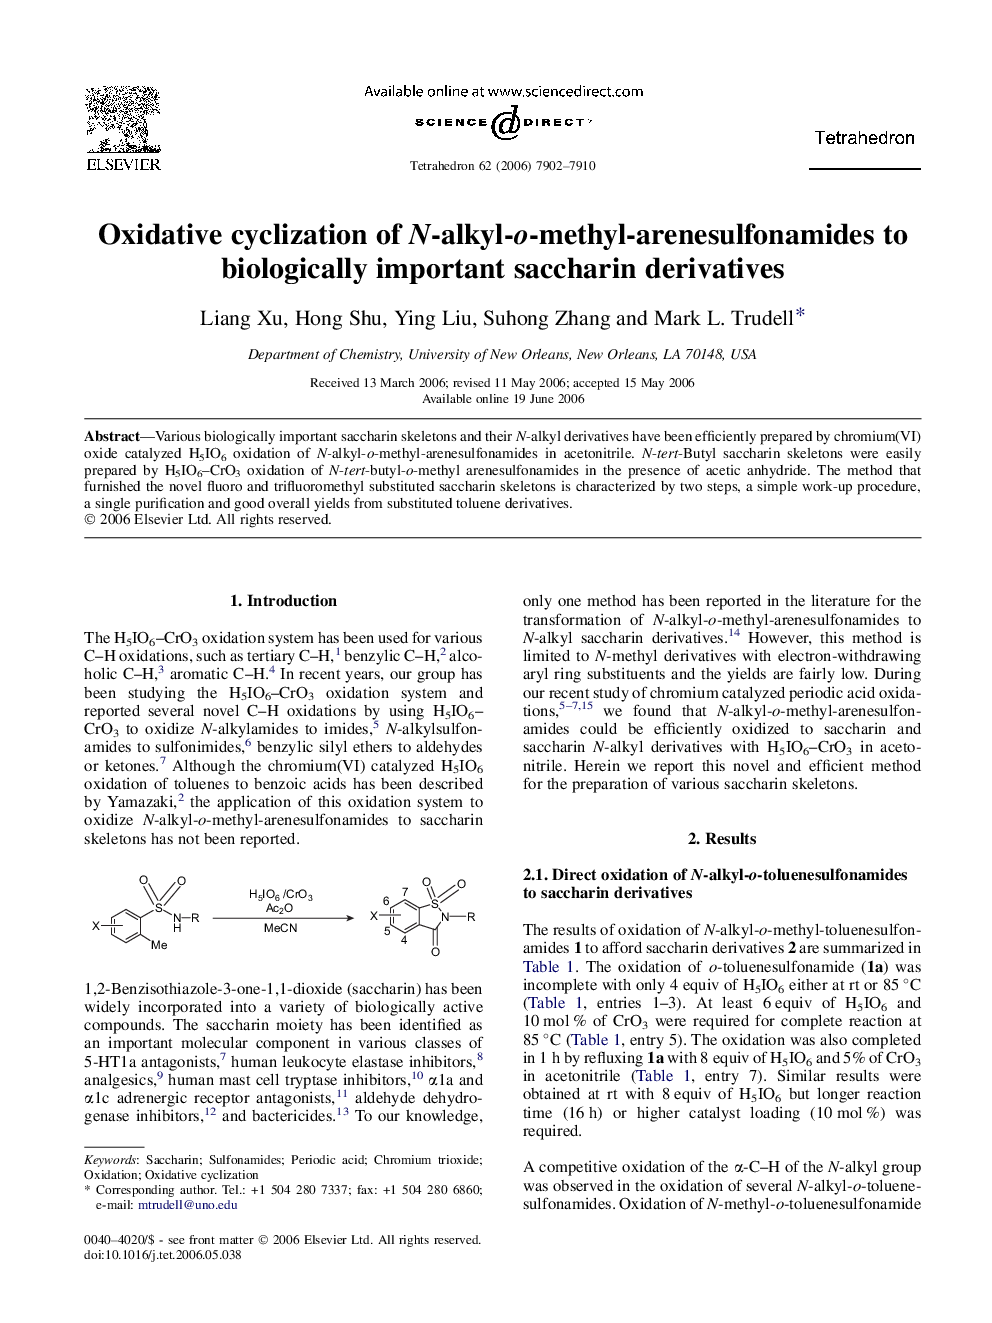 Oxidative cyclization of N-alkyl-o-methyl-arenesulfonamides to biologically important saccharin derivatives